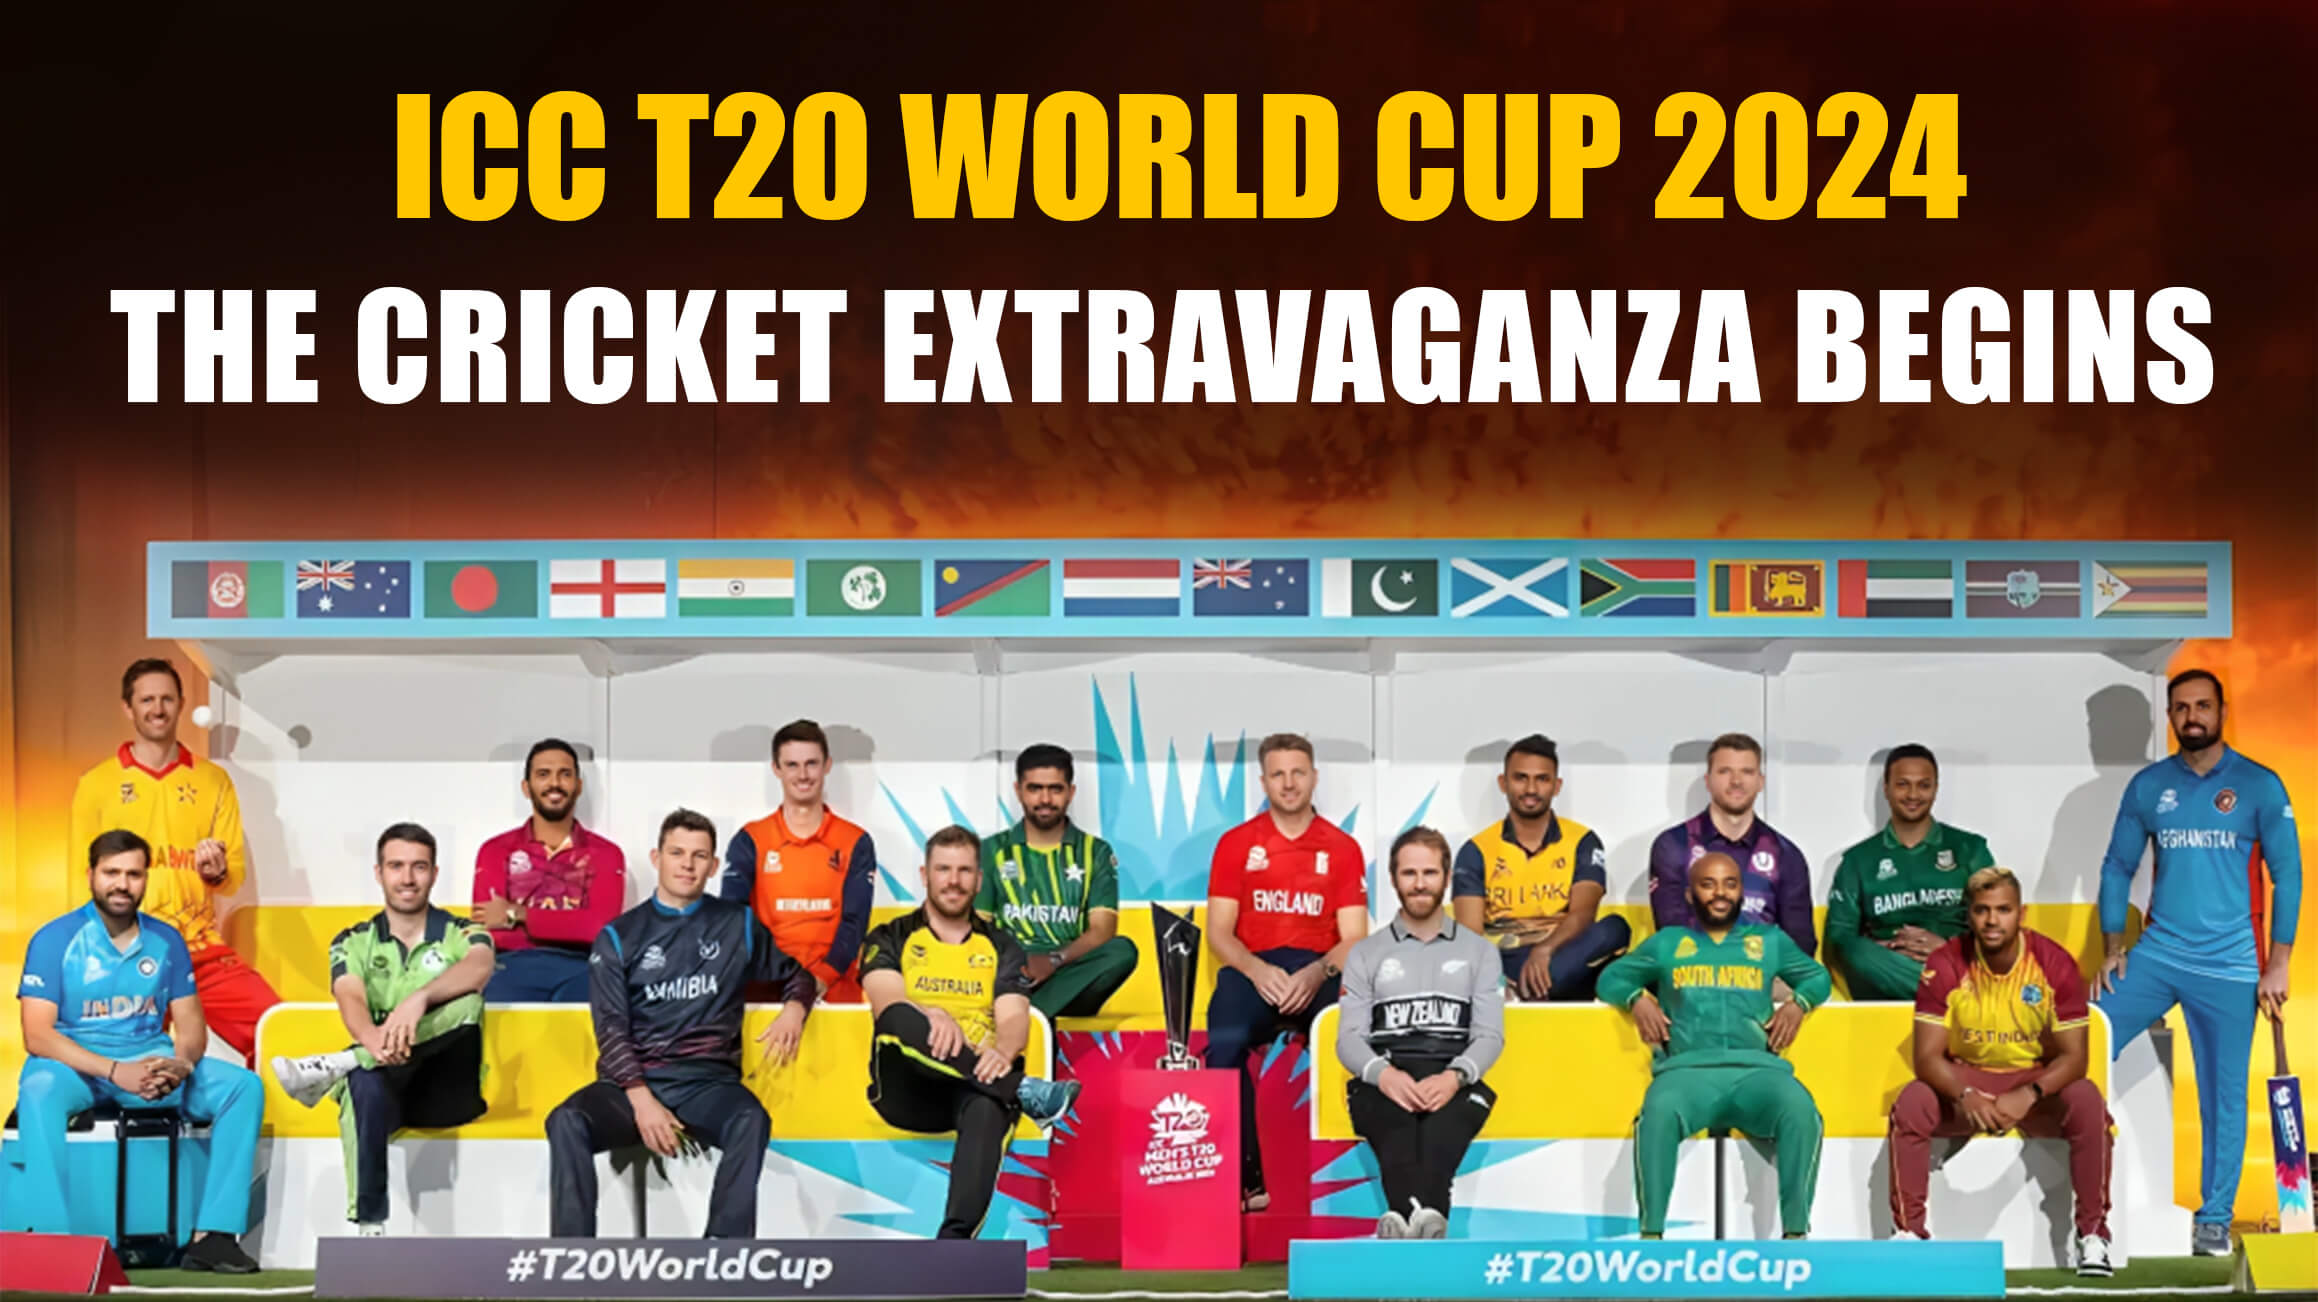 ICC T20 World Cup 2024: The Cricket Extravaganza Begins